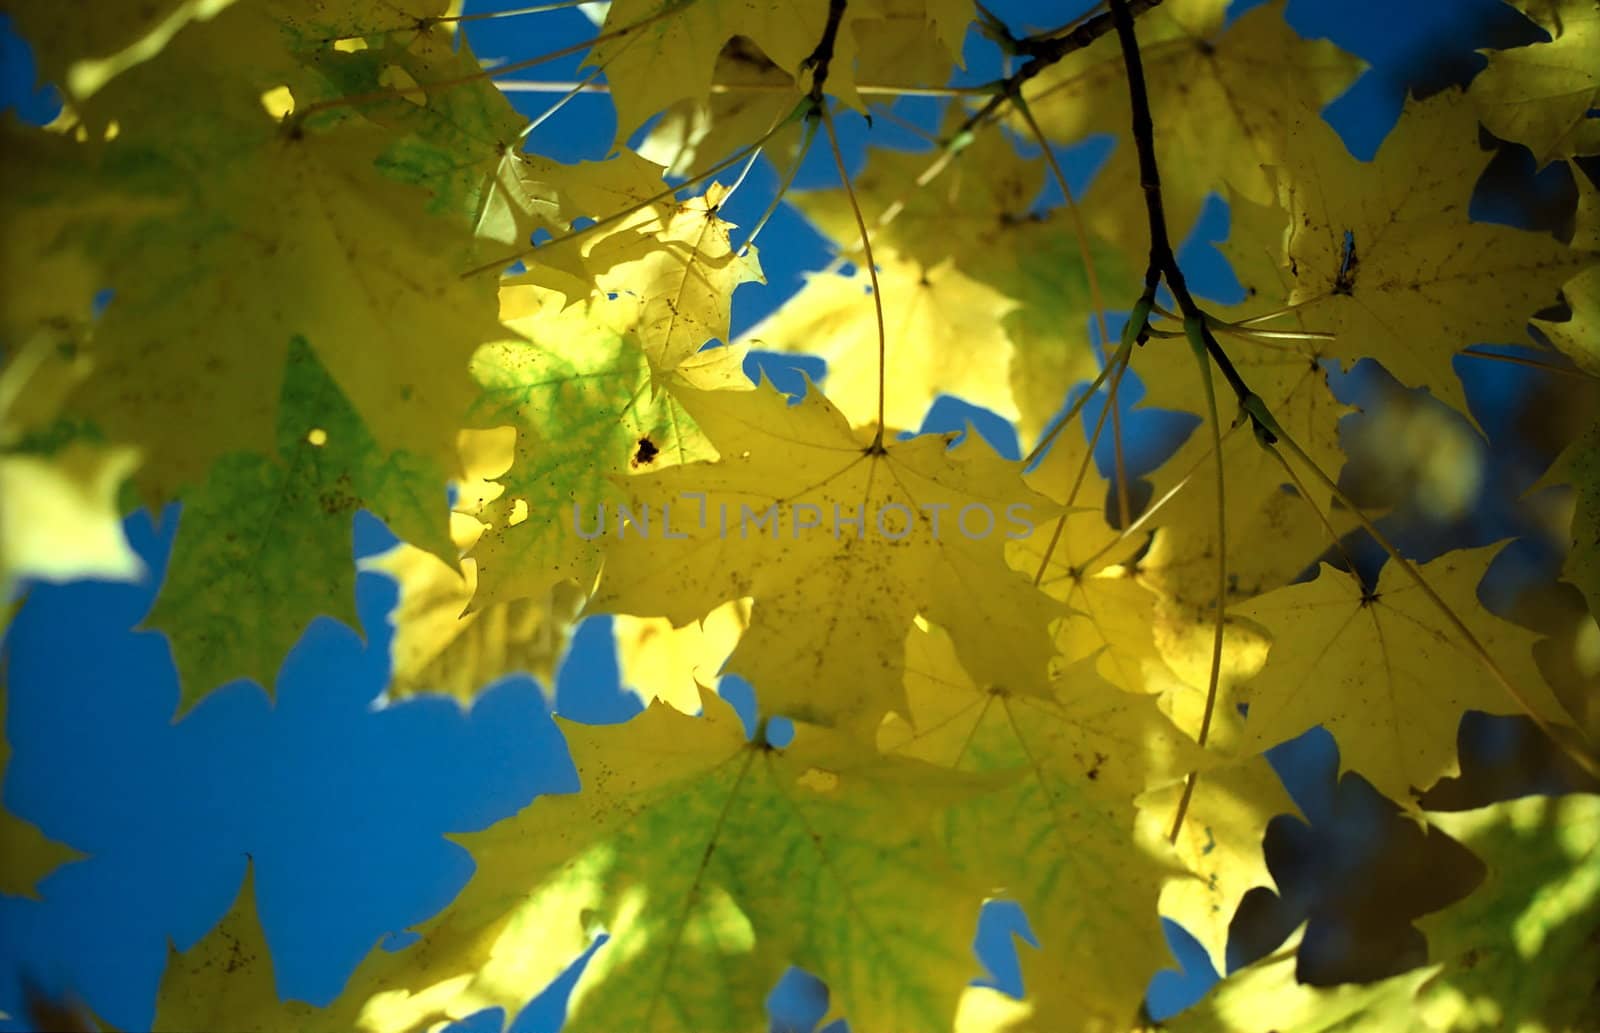 Sun in autumn maple leaves against blue sky